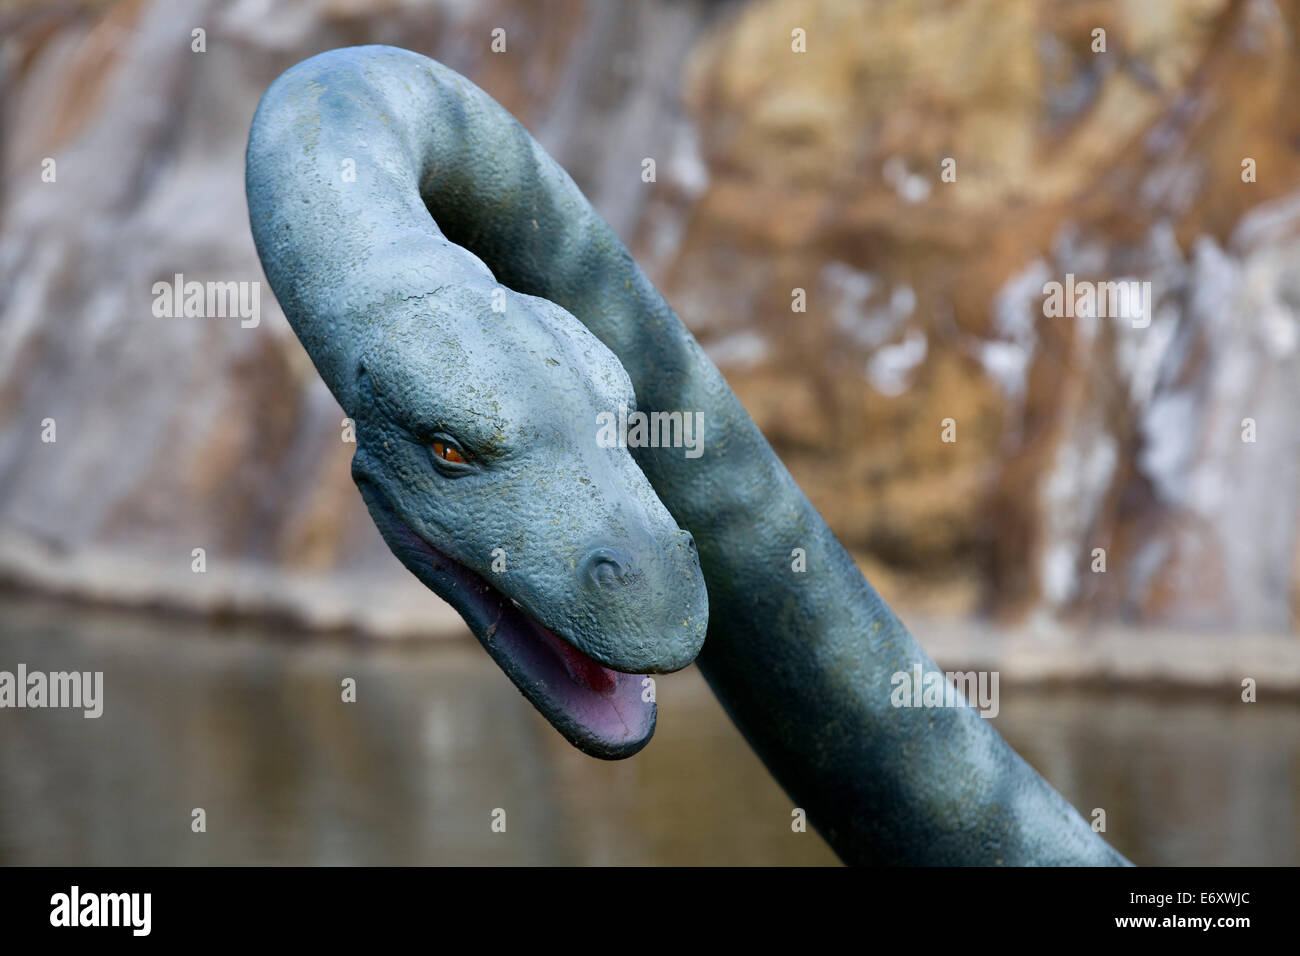 Estatua de un plesiosaurio un reptil acuático Foto de stock